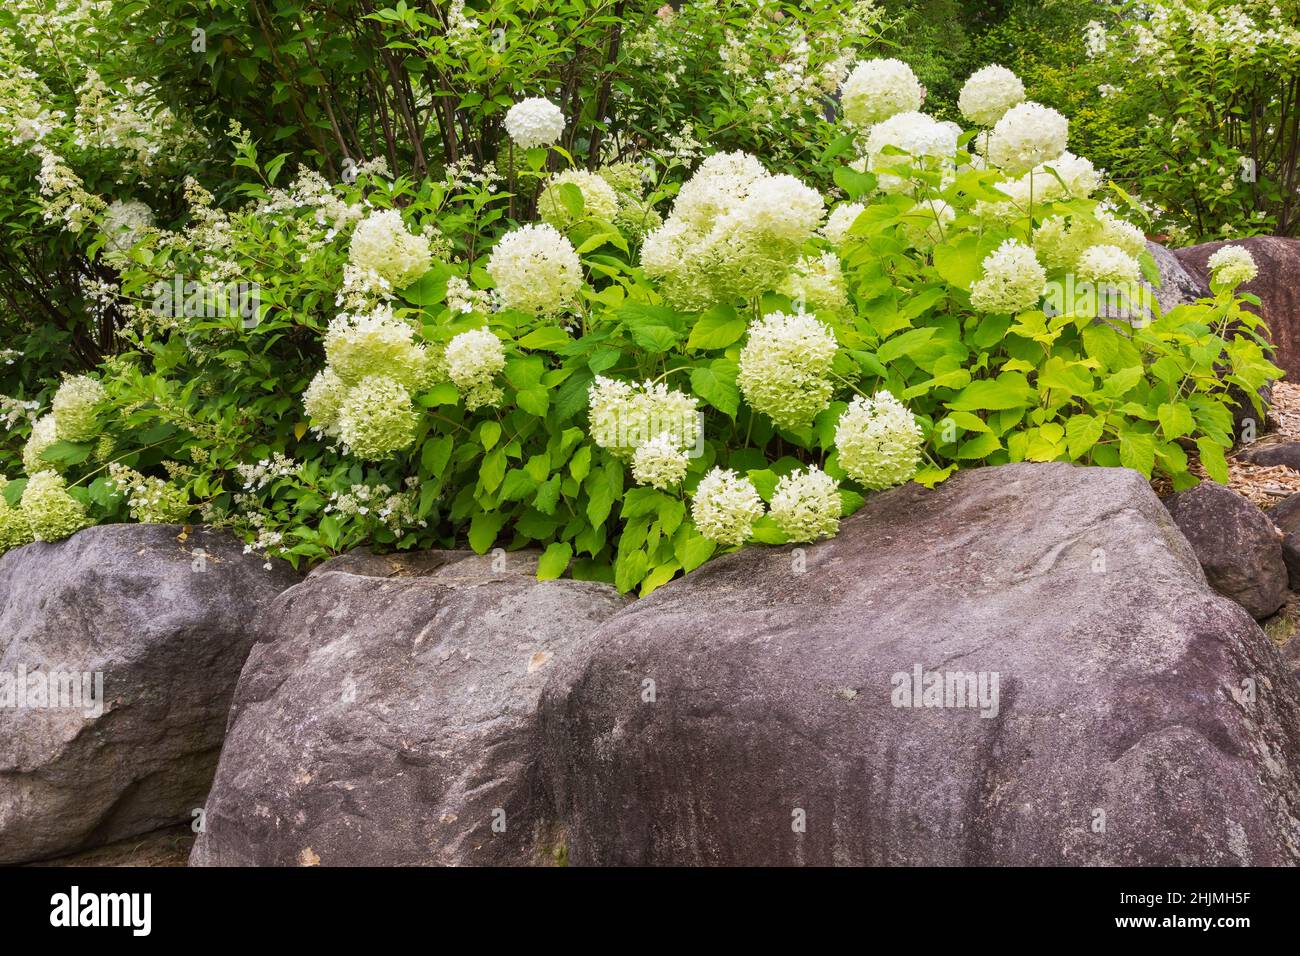 Hydrangea arborescens 'Annabelle' shrub in raised rock edged border in backyard garden in summer. Stock Photo